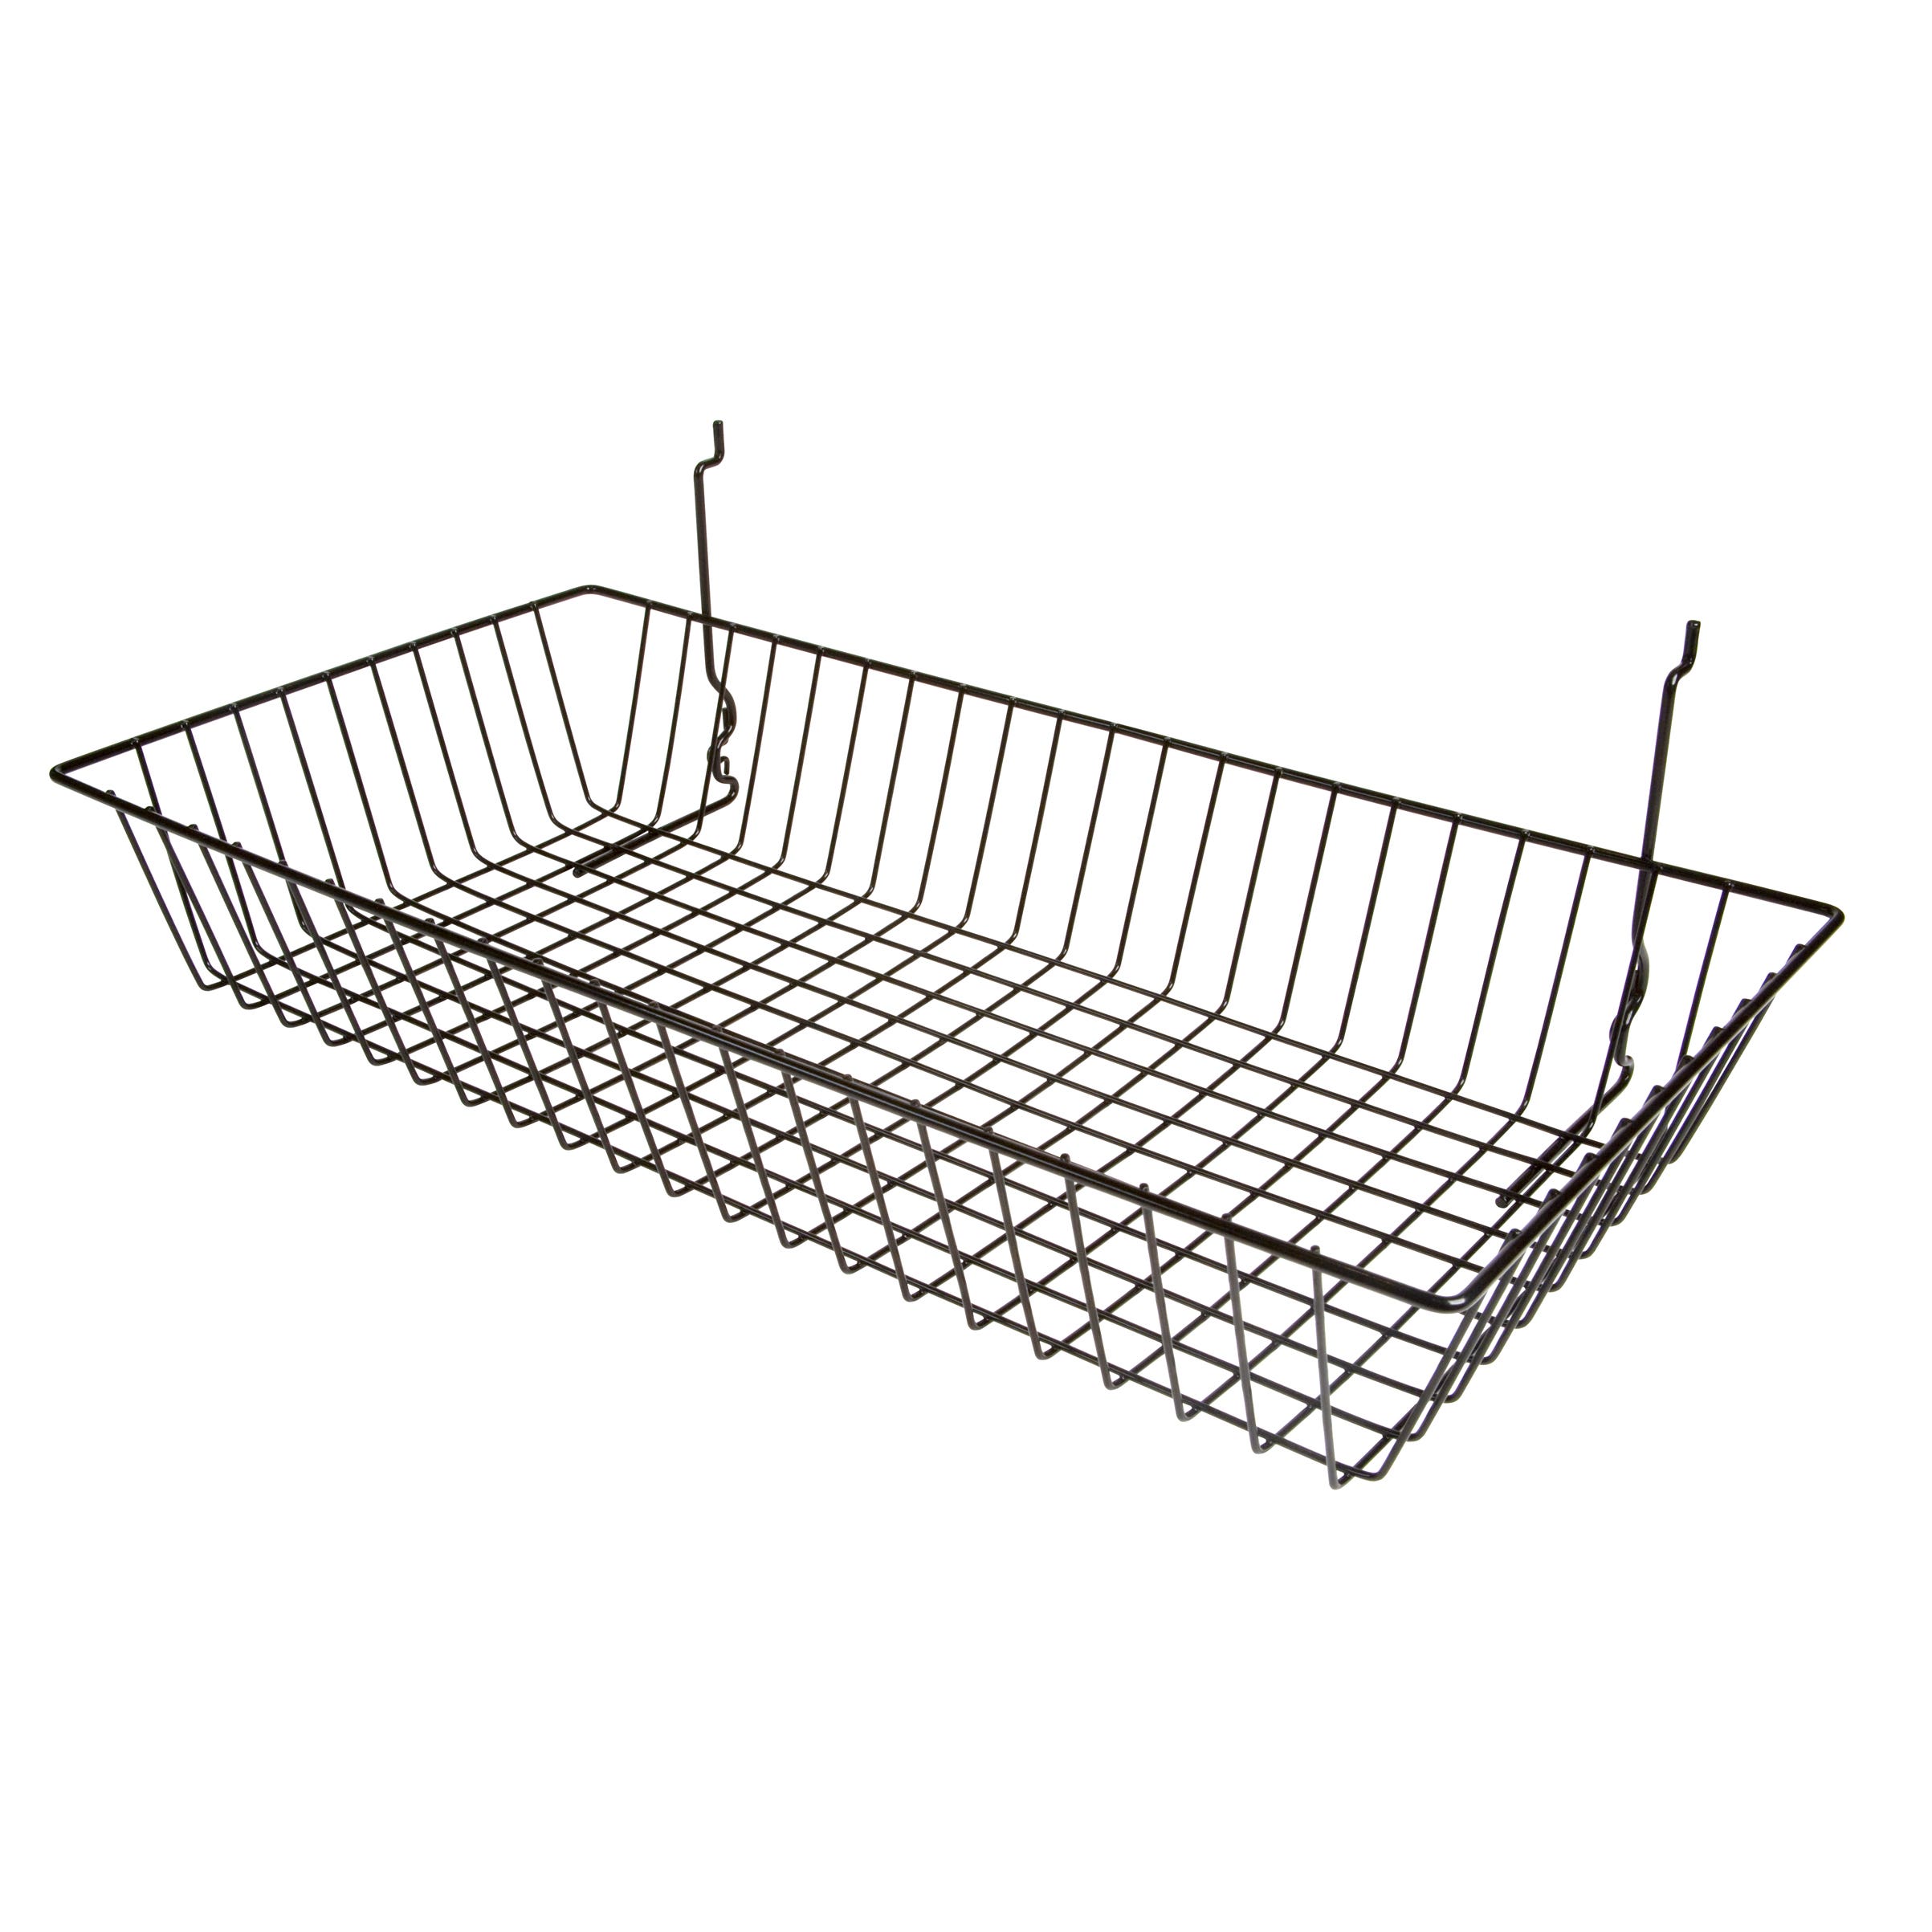 New Retails White Basket fits Slatwall,Grid,Pegboard 12"w x 6"d x 6"h 